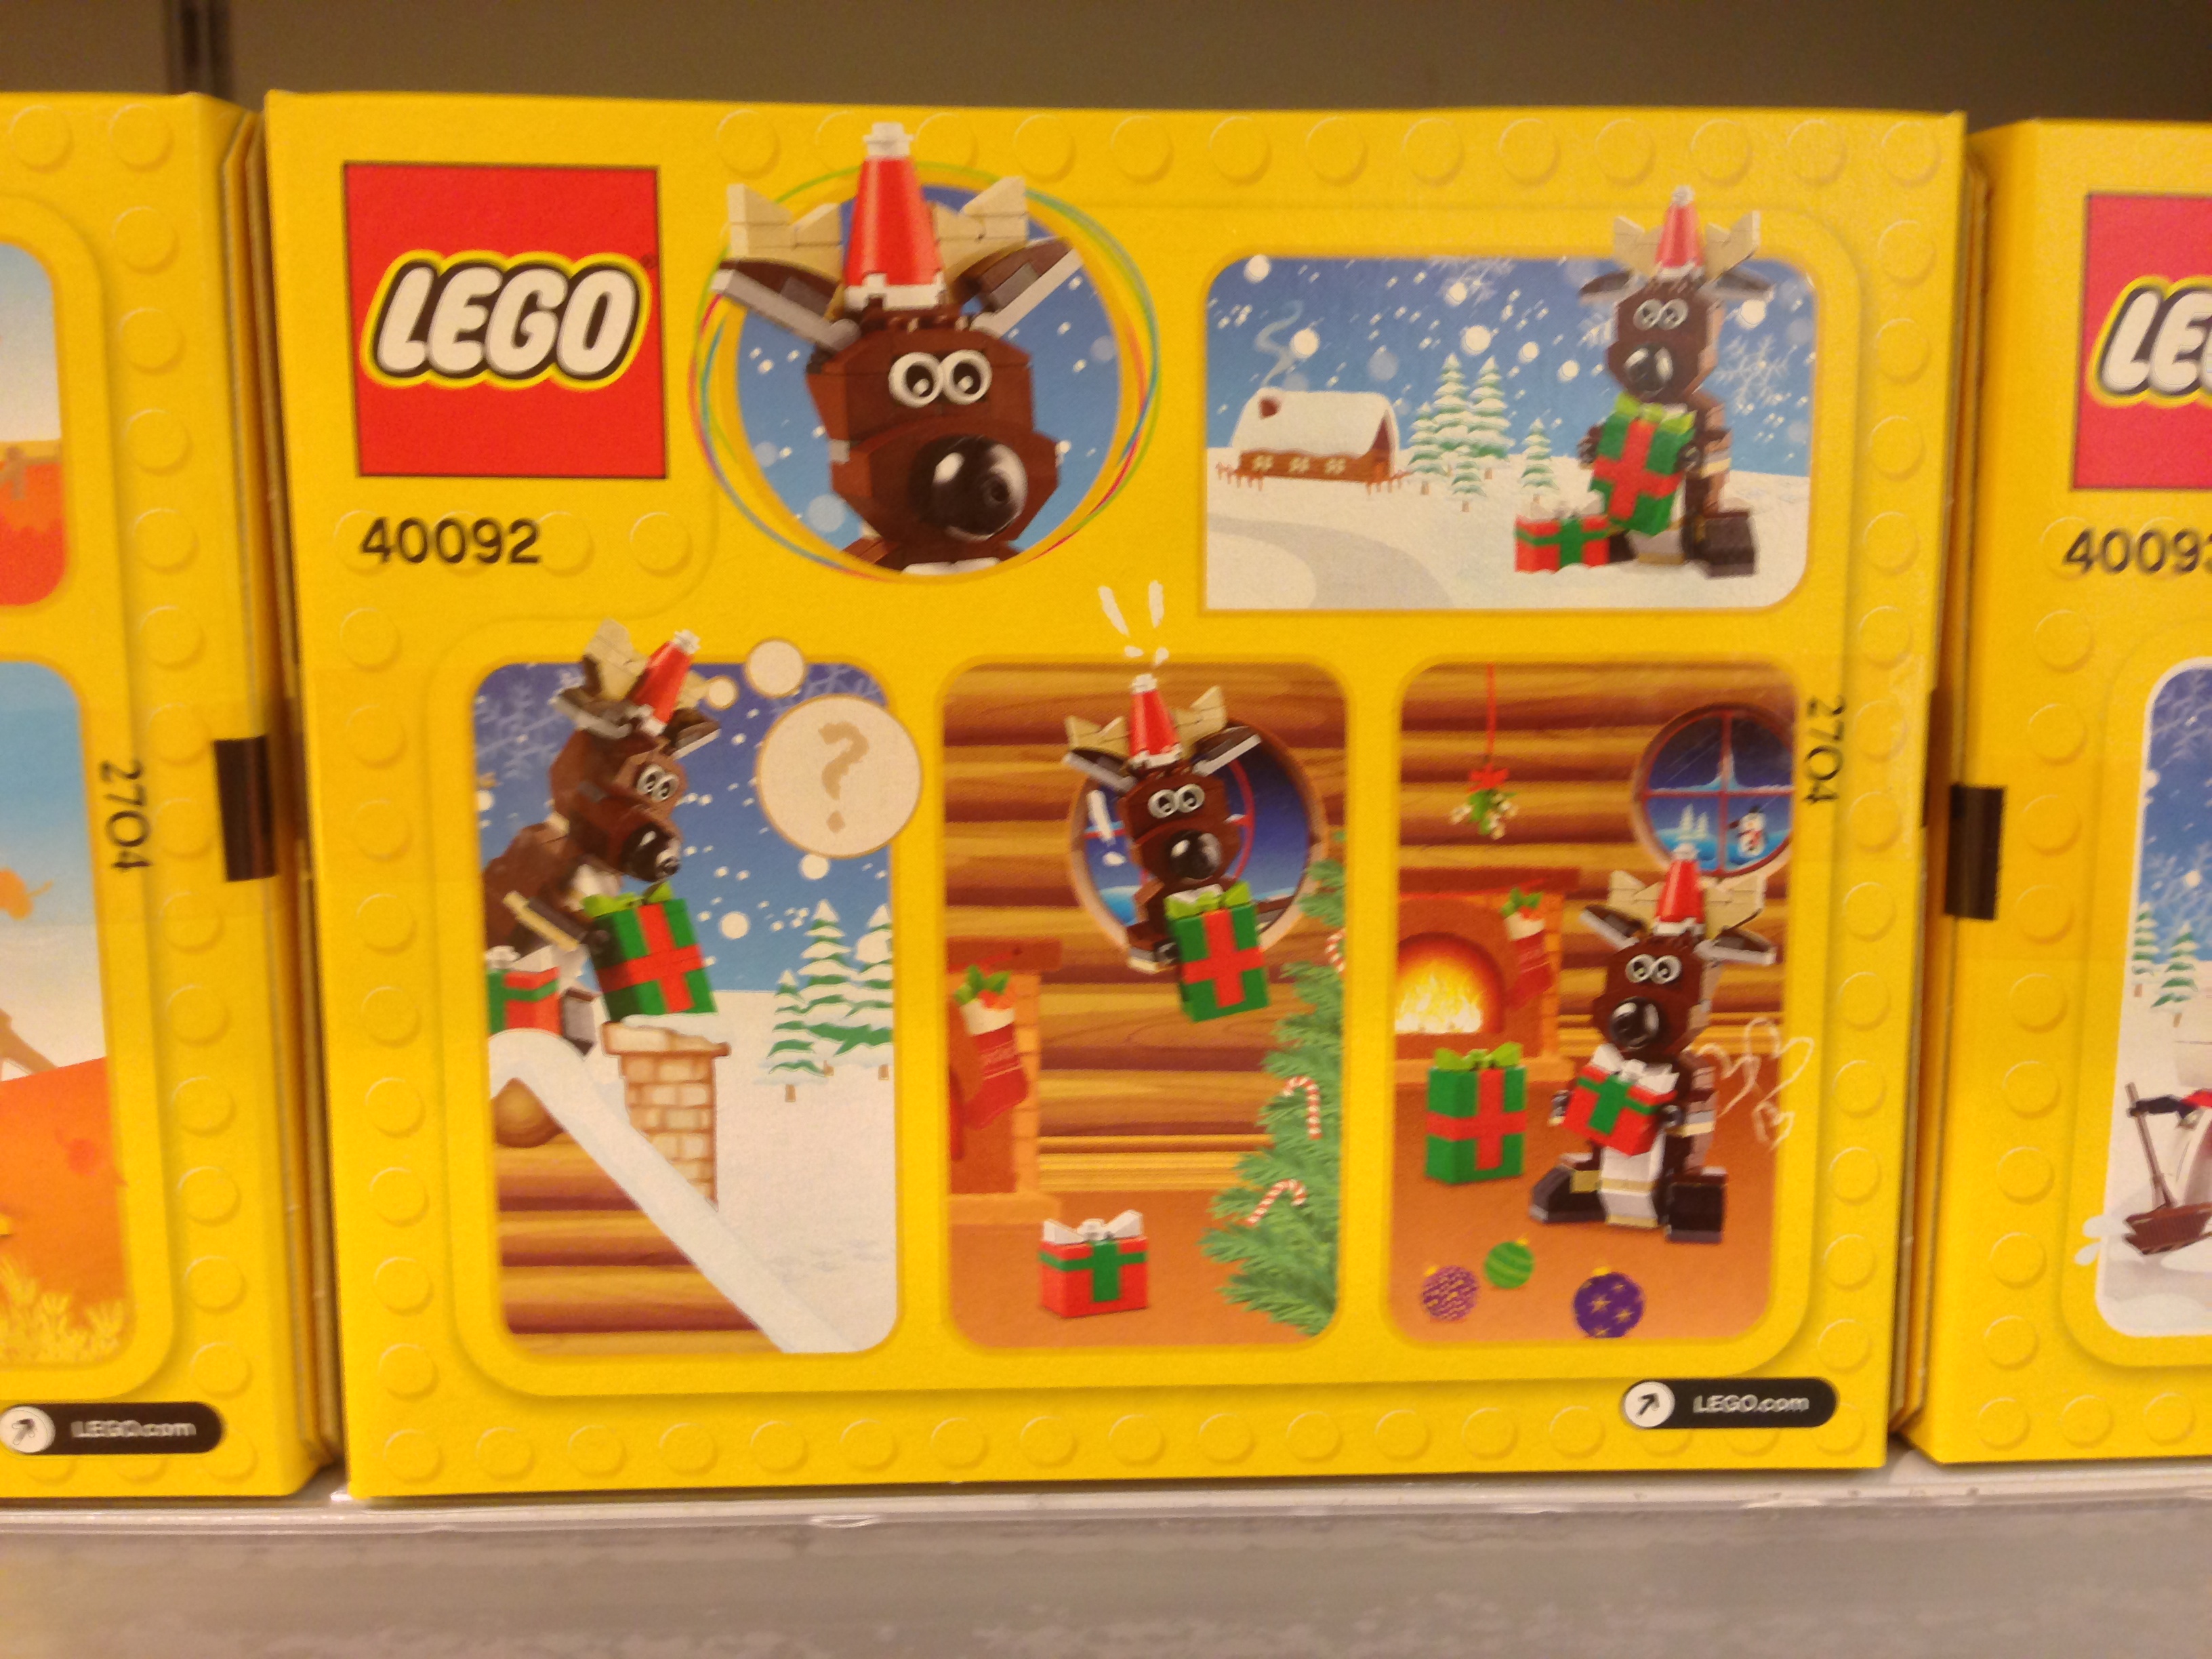 40092 LEGO Christmas Reindeer Holiday Set!